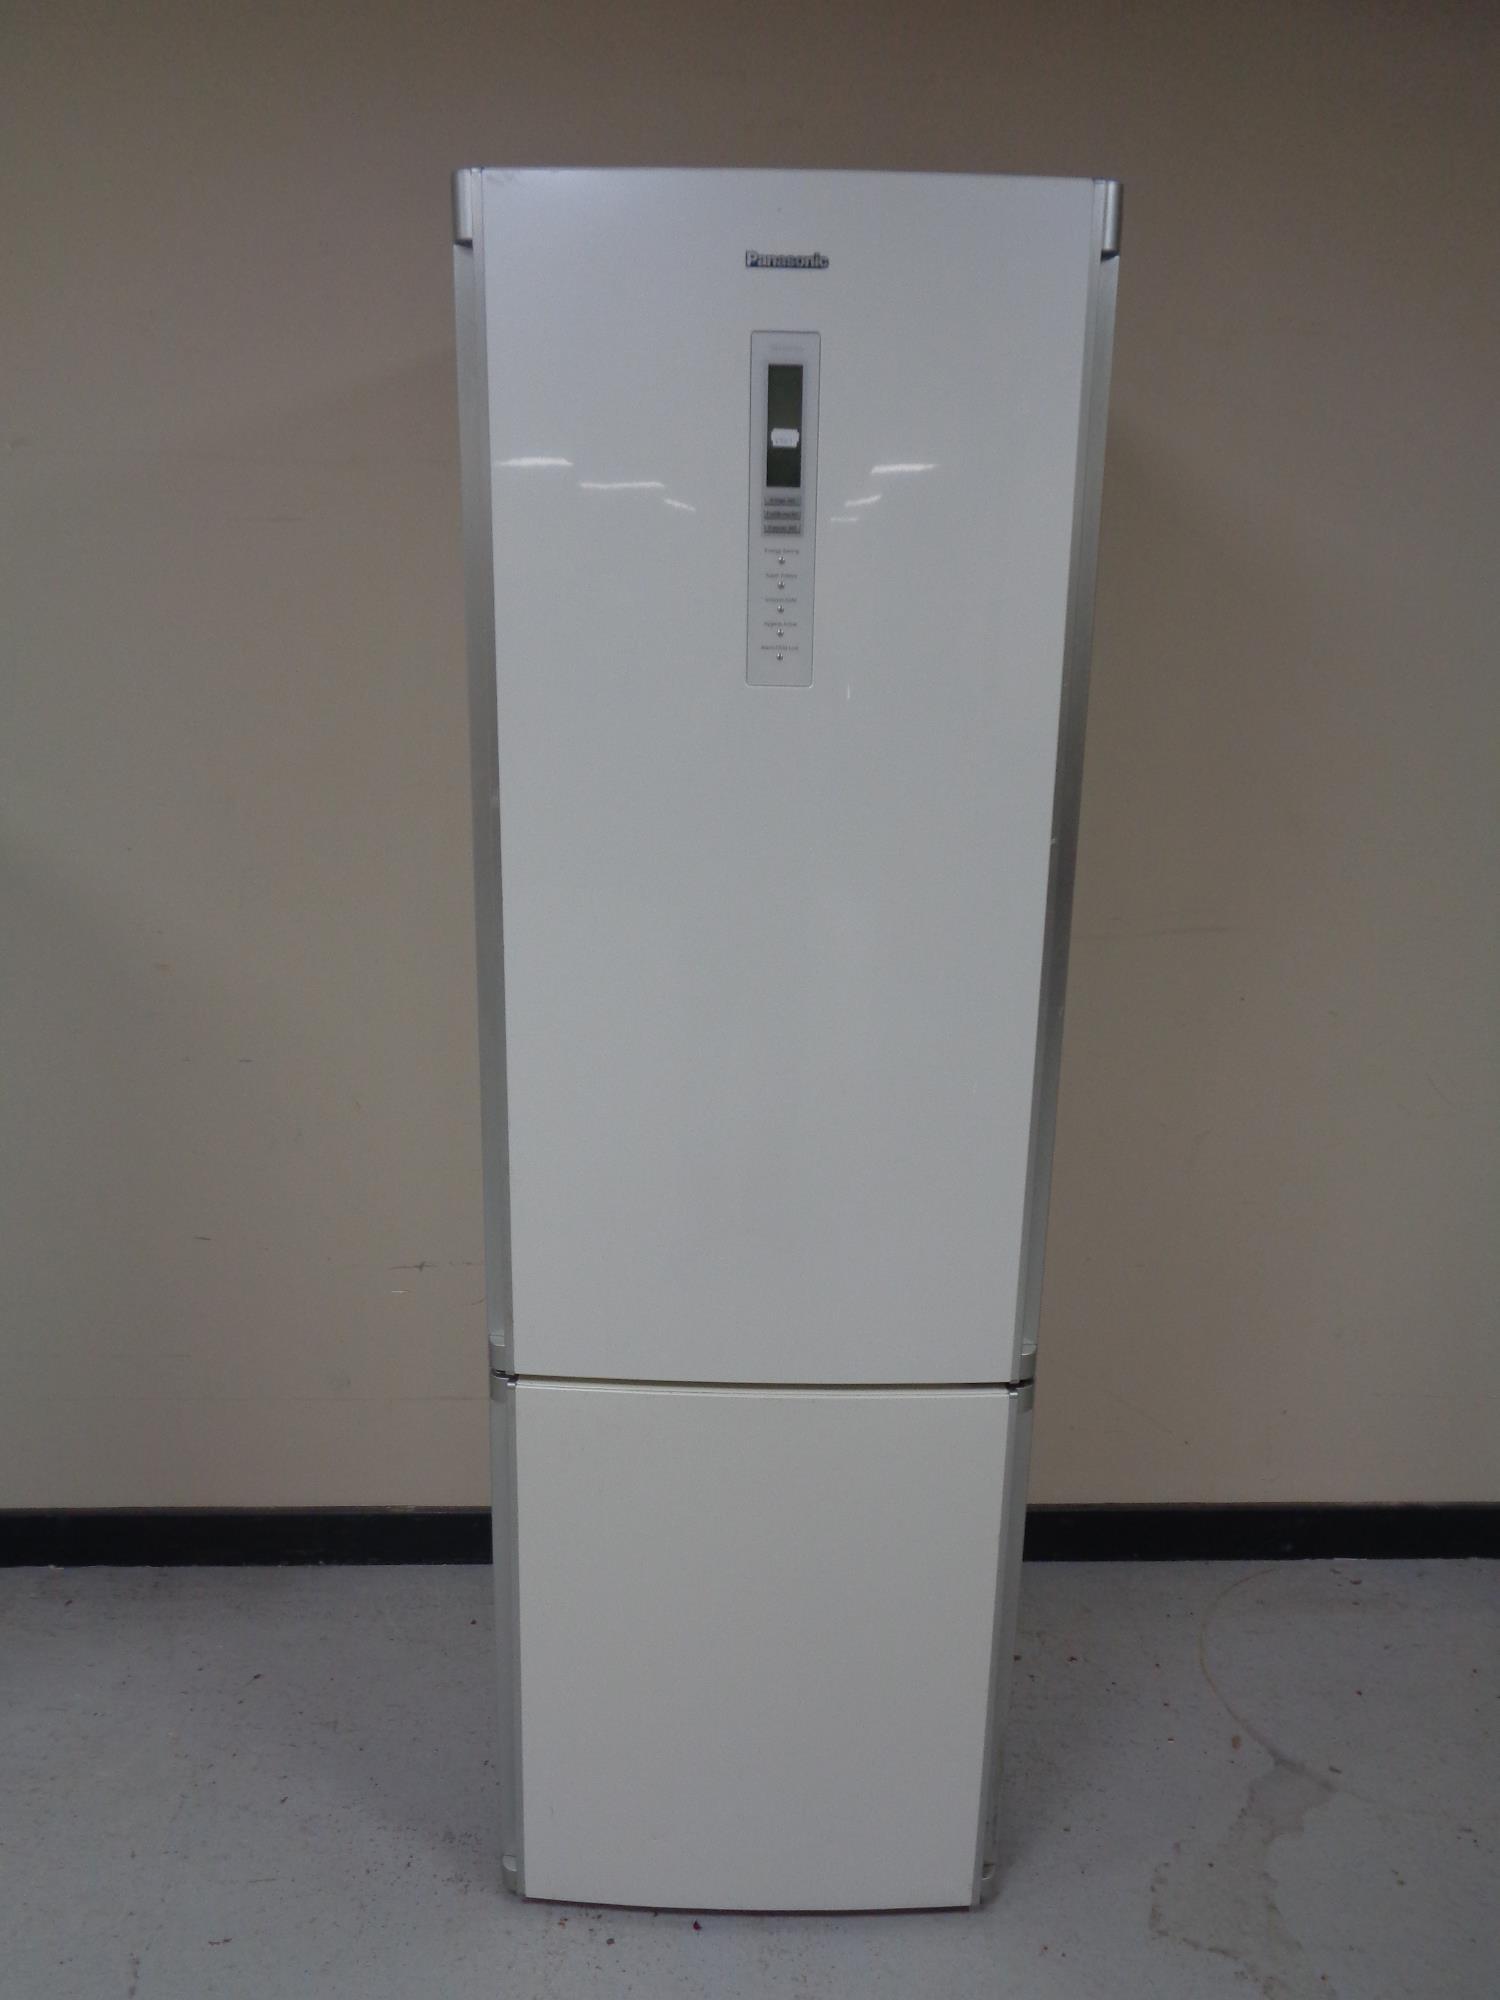 A Panasonic inverter upright fridge freezer.